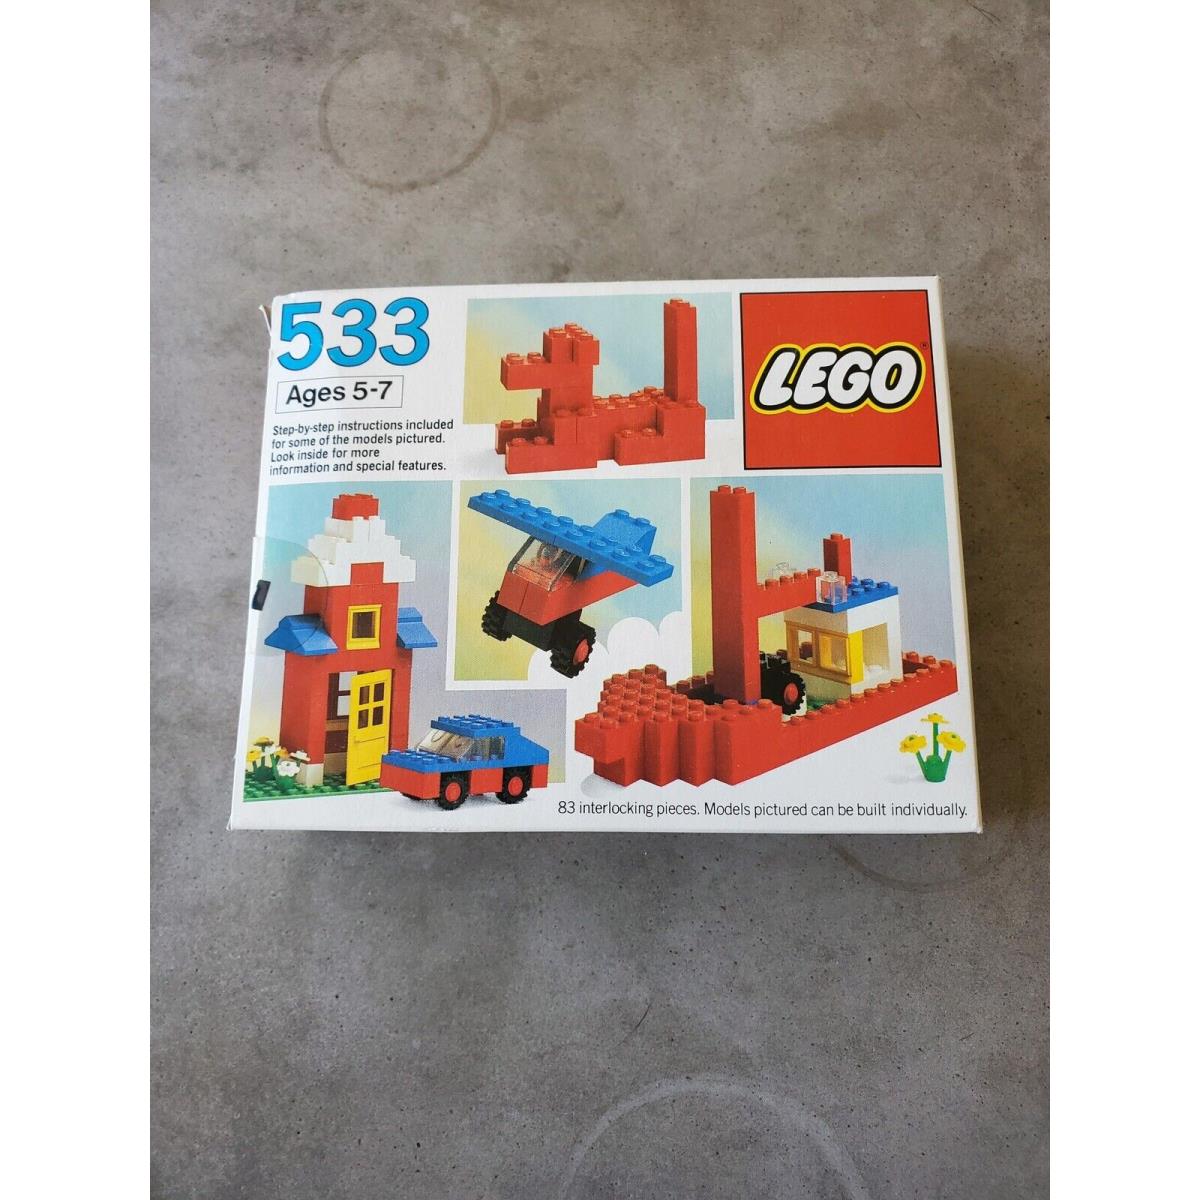 Vintage Lego Set 533 Basic Build 83 Pieces Complete Year 1984 Box